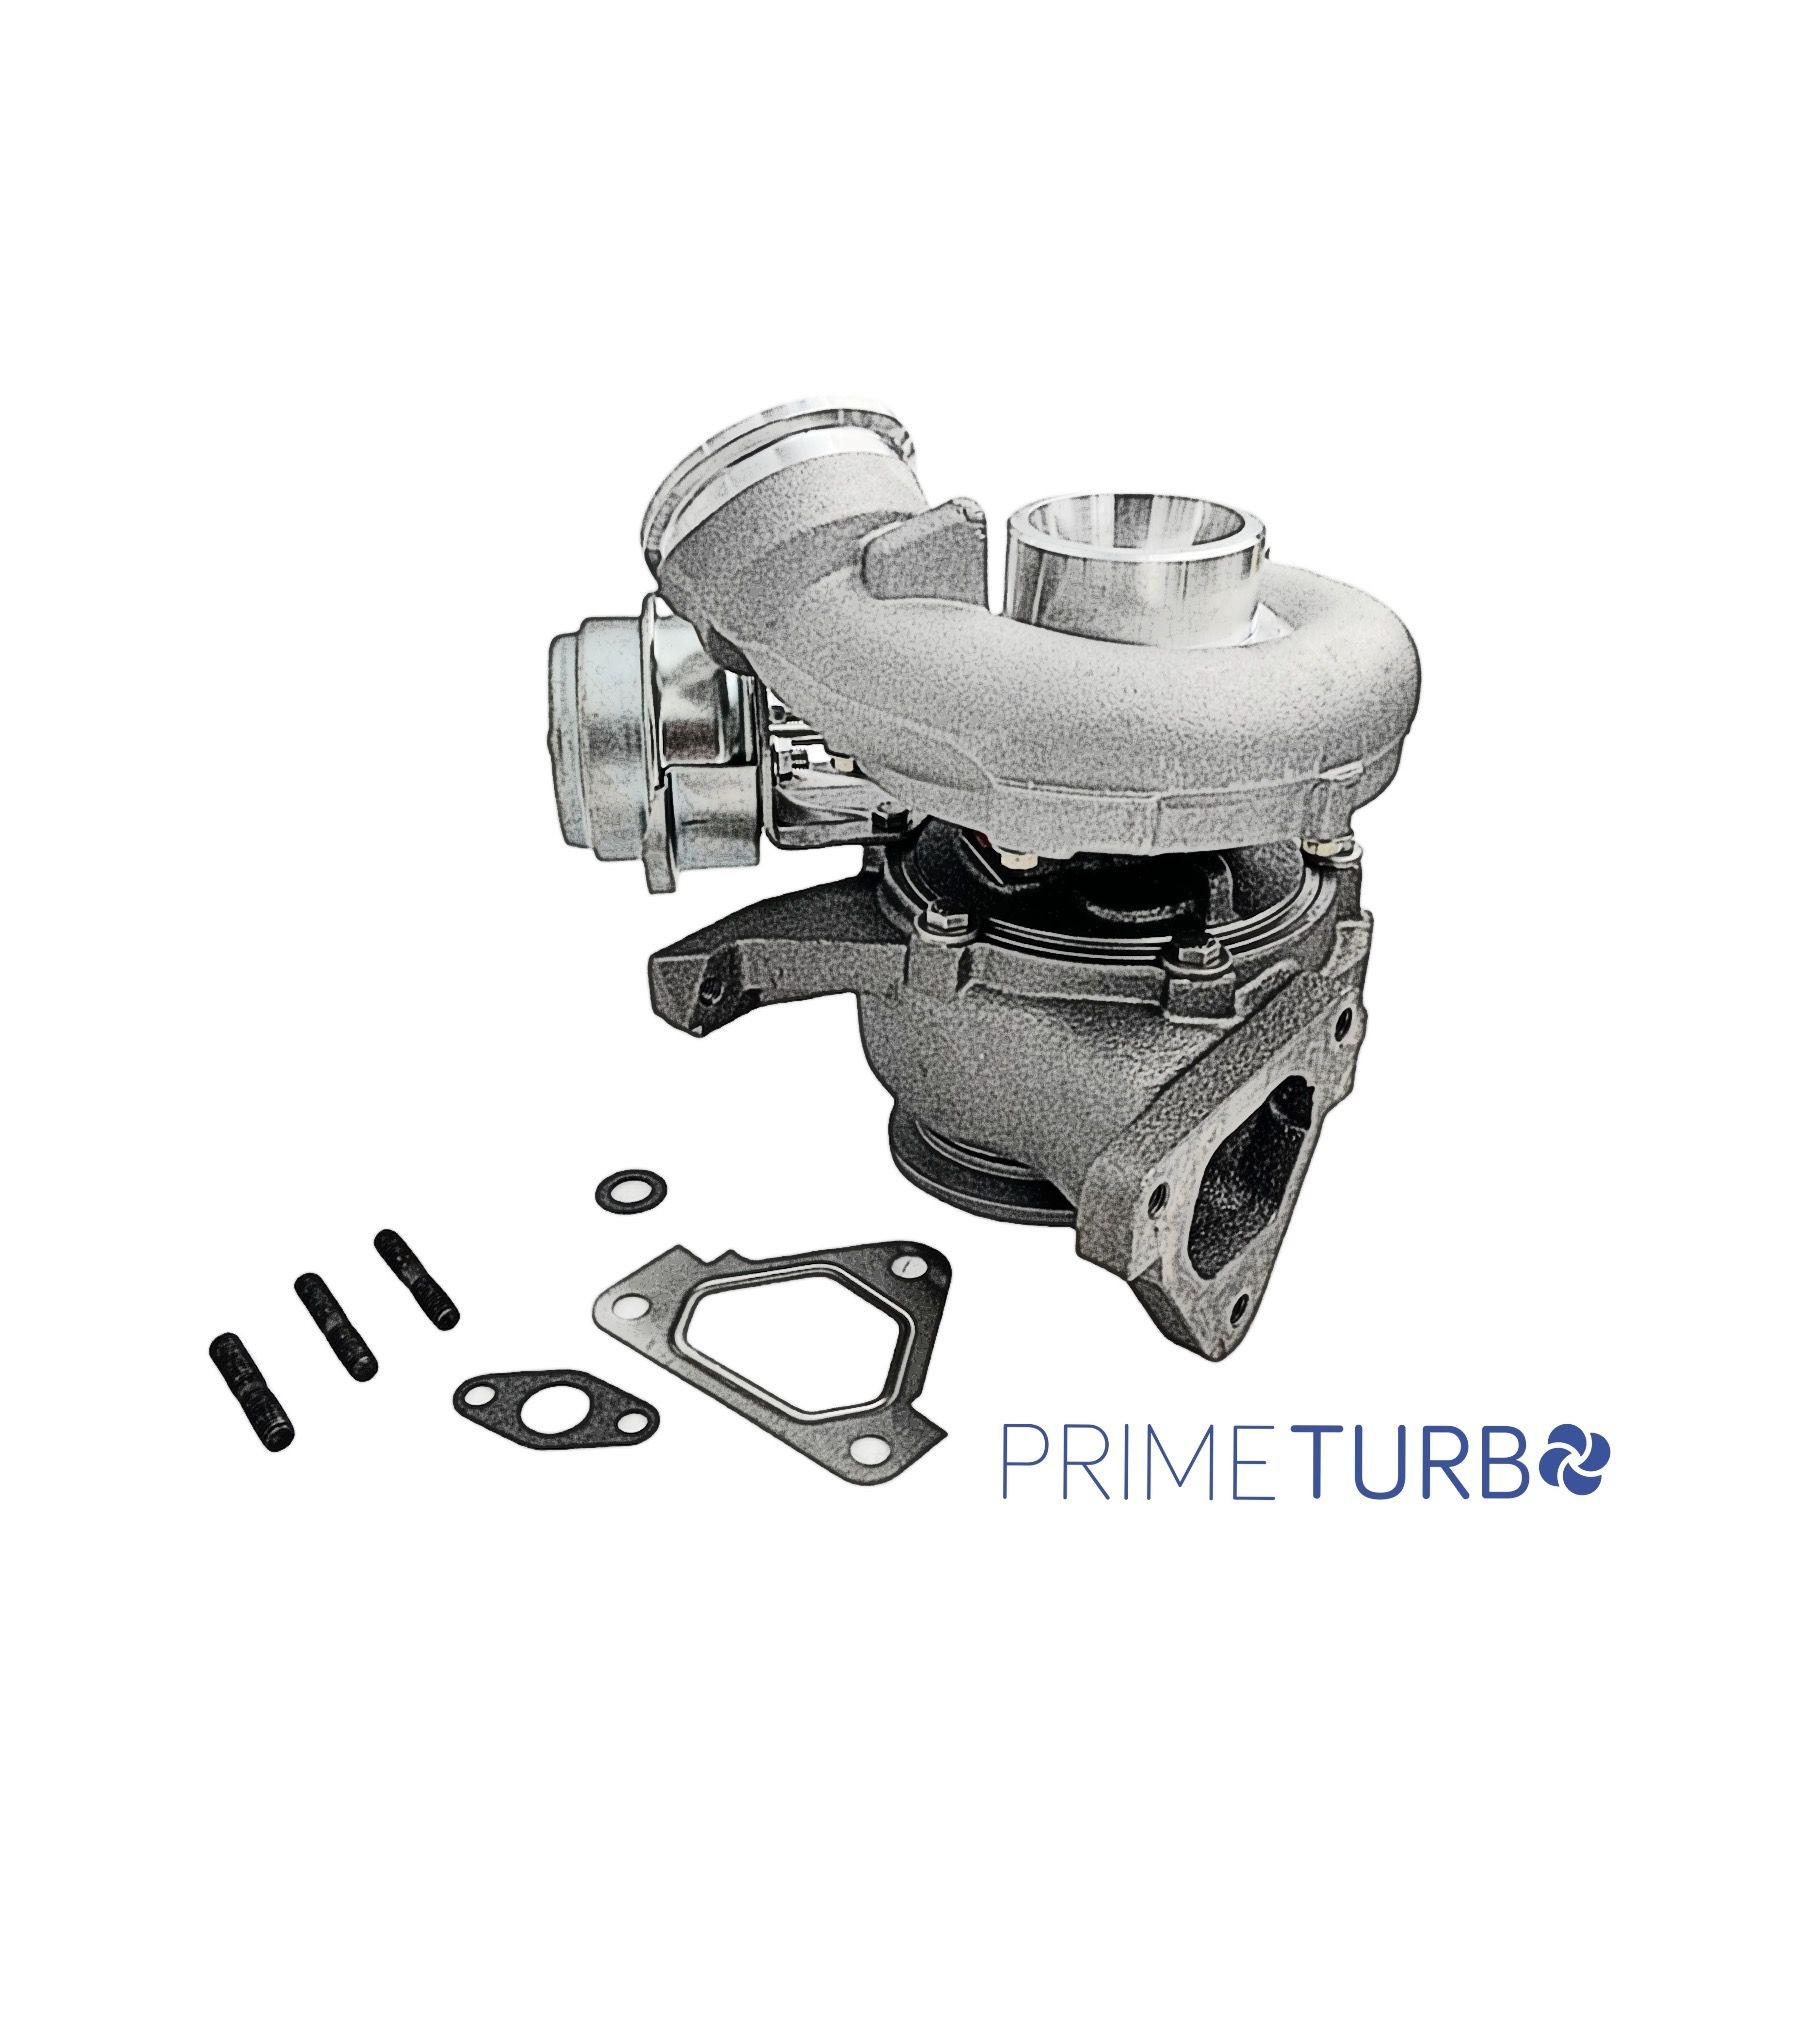 Prime Turbo V00053T Turbocharger 8.200.369.581